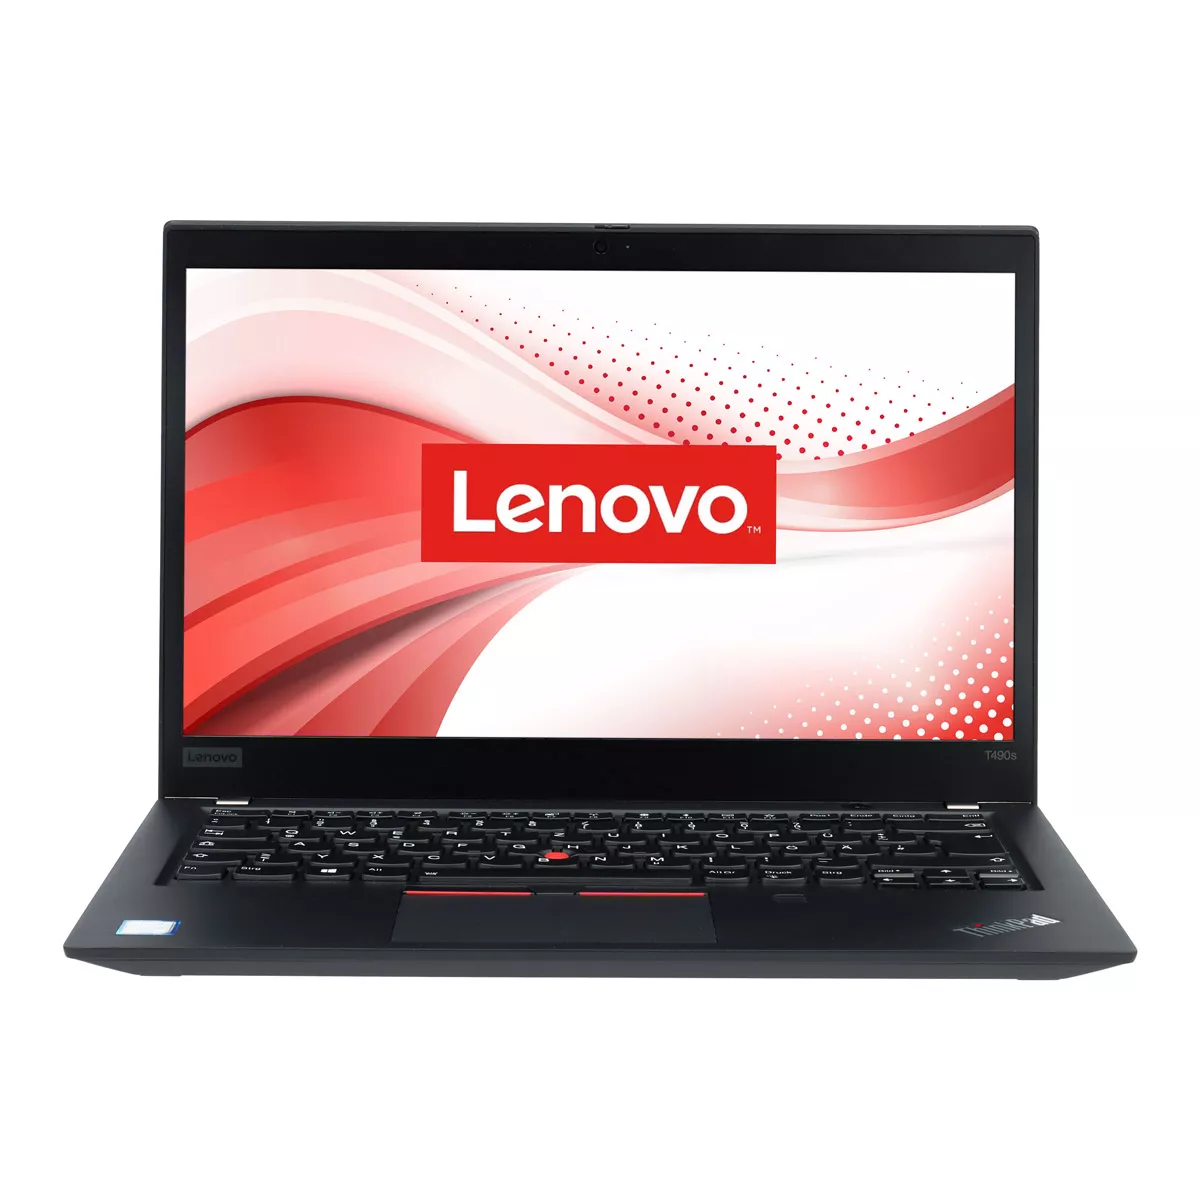 Lenovo ThinkPad T490s Core i5 8365U Full-HD Touch 16 GB 240 GB M.2 nVME SSD Webcam A